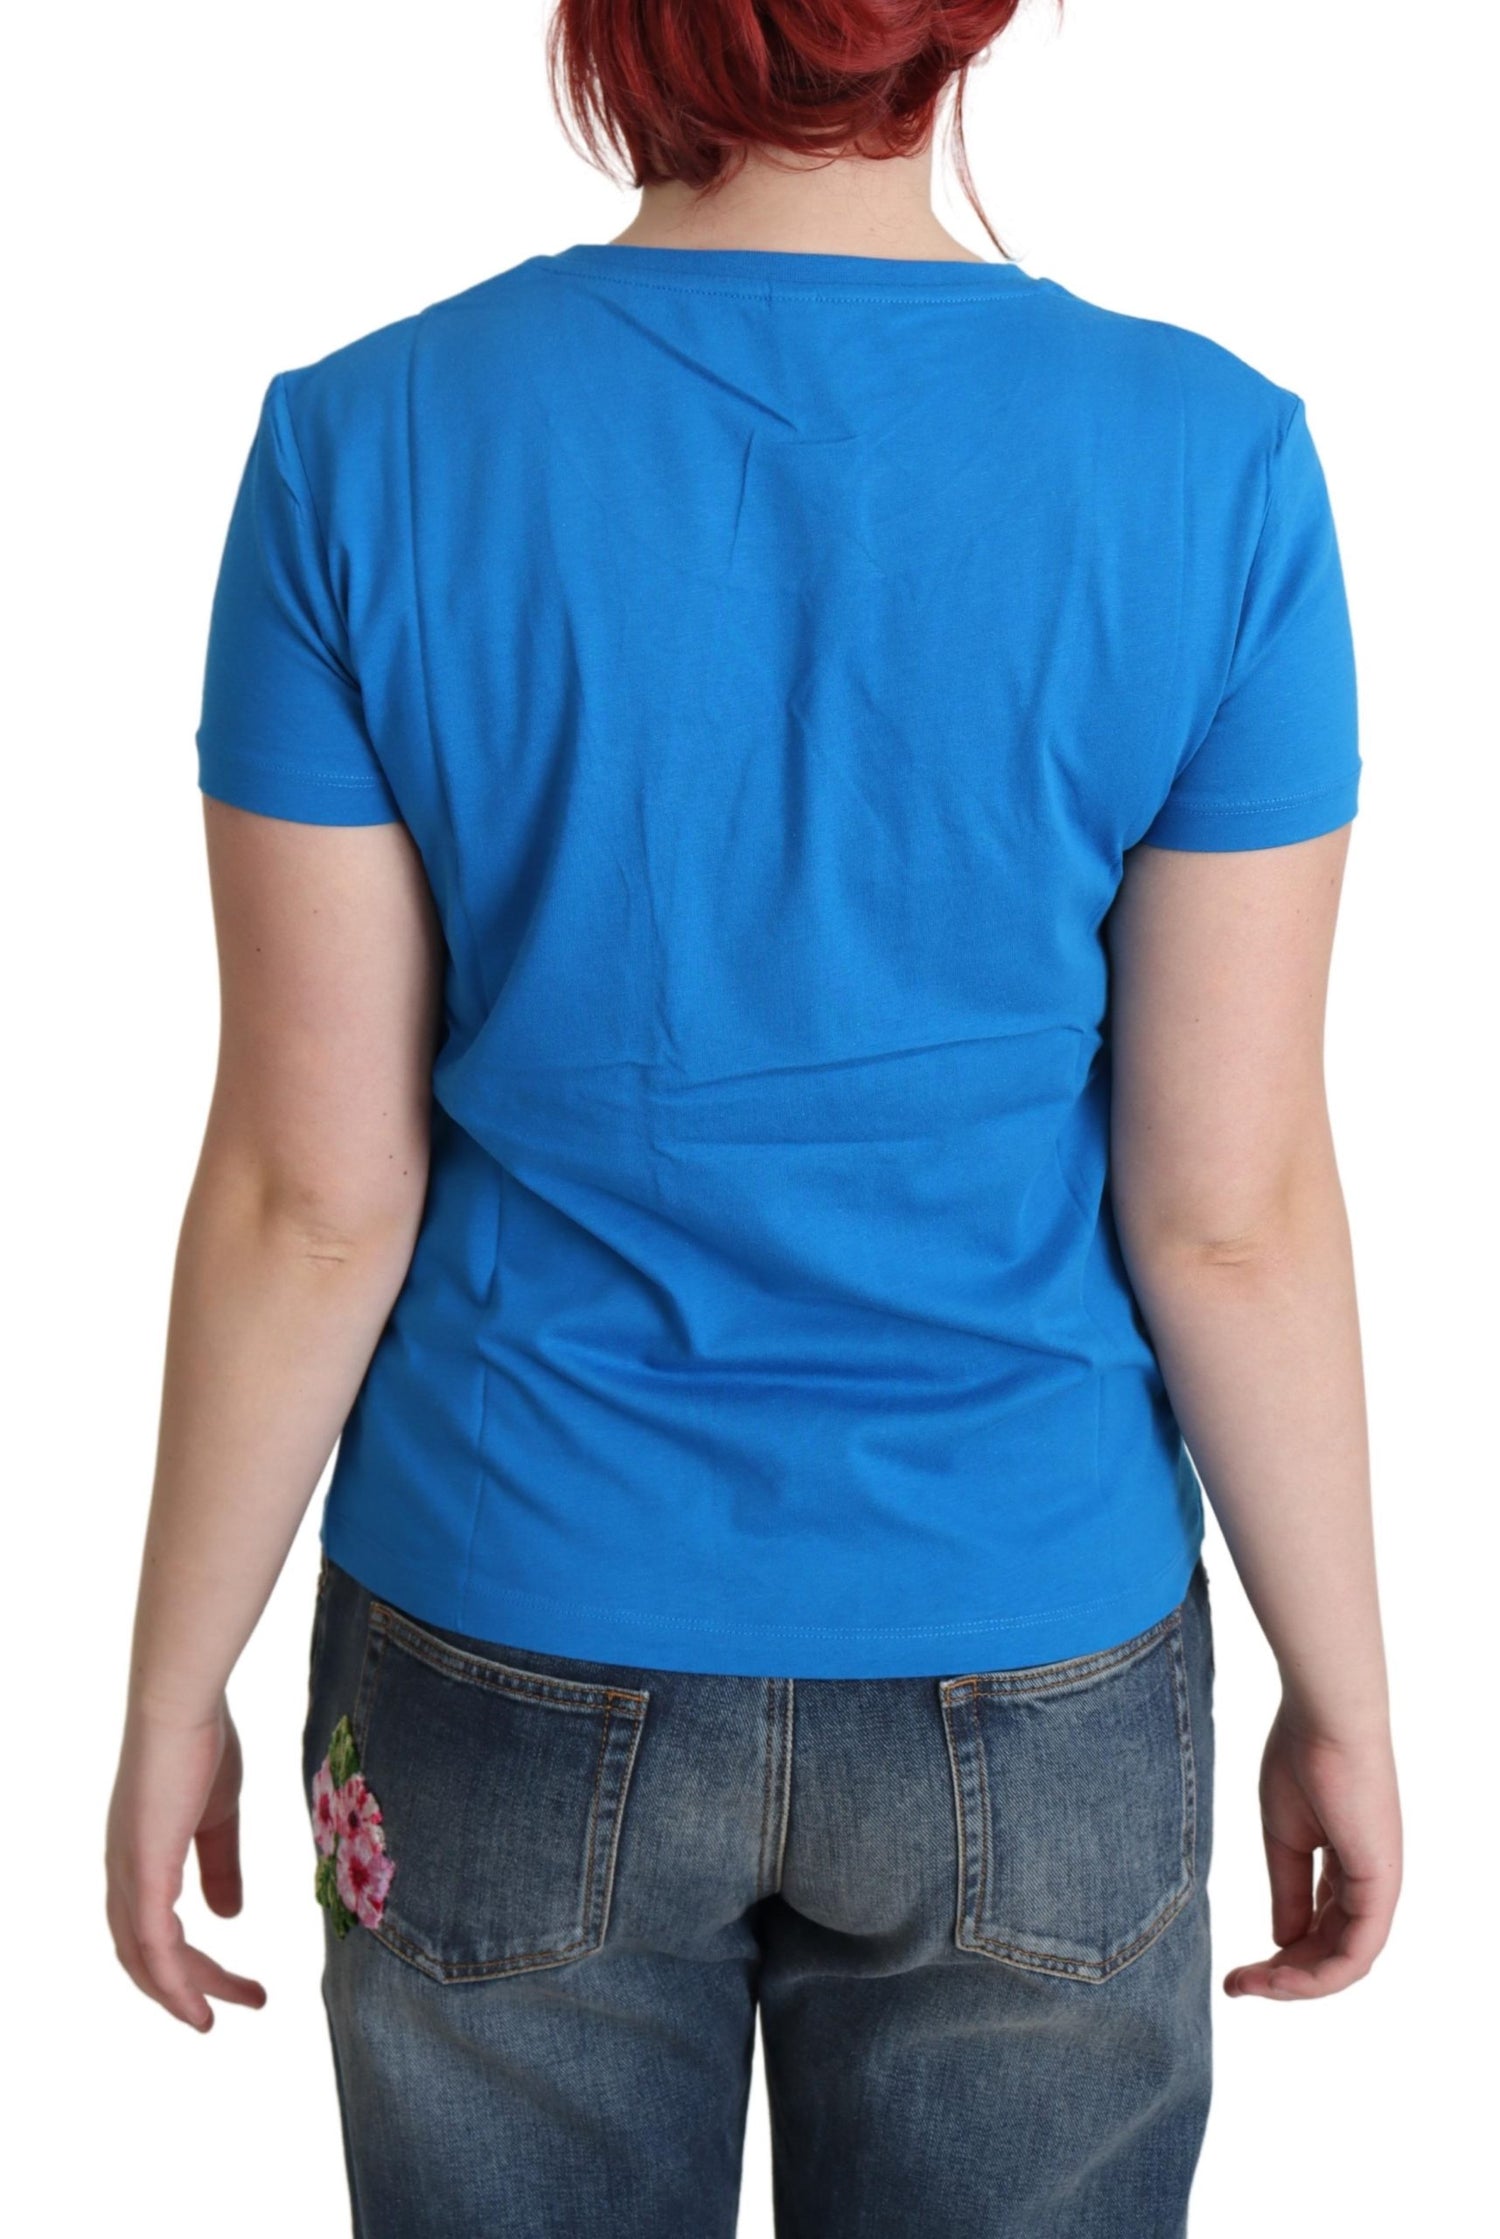 Blue Printed Cotton Short Sleeves Tops T-shirt